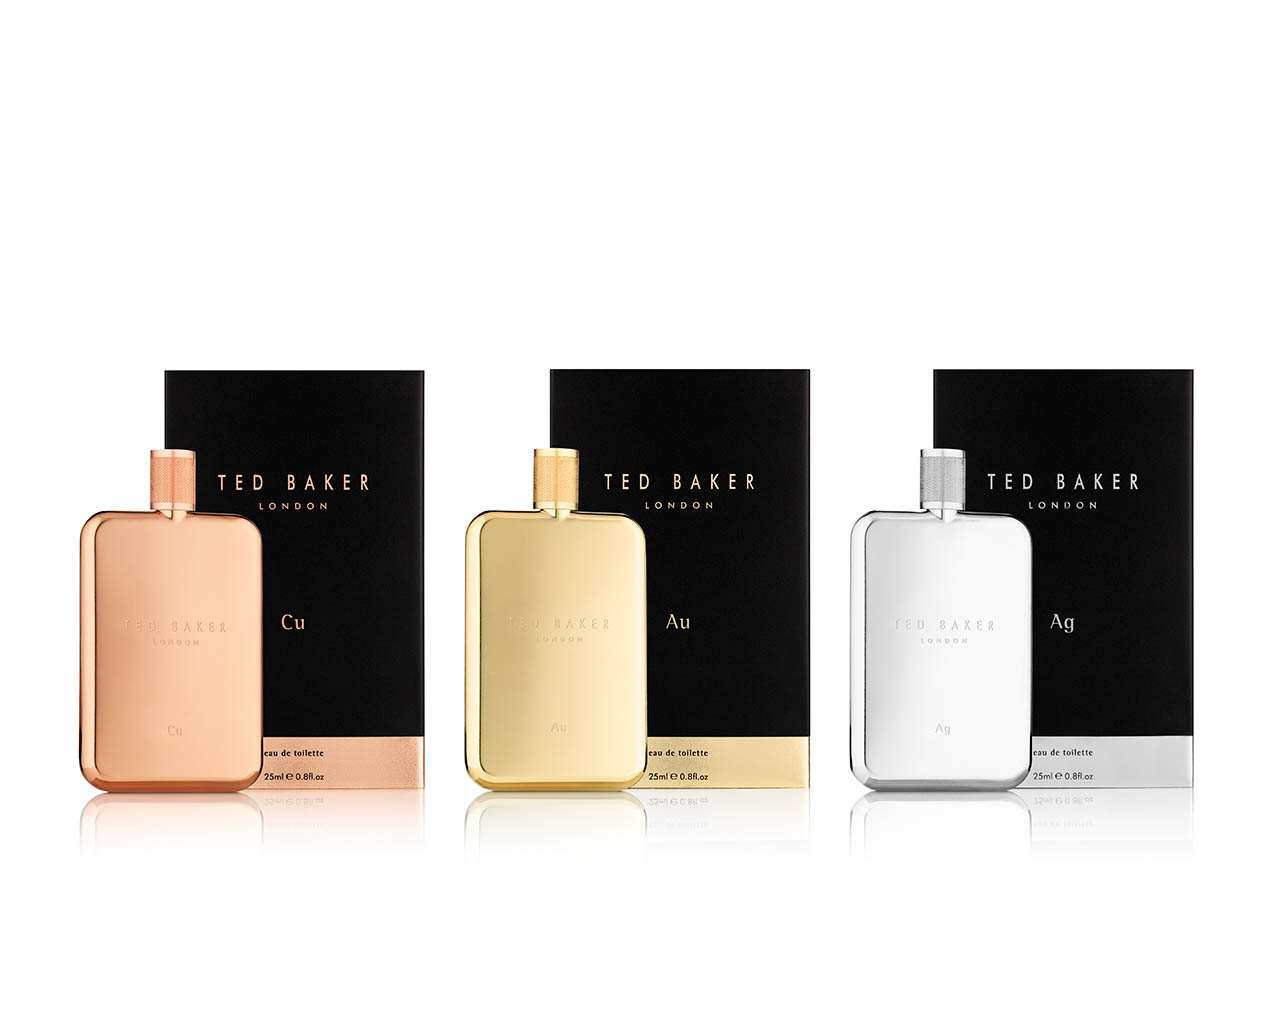 Packshot Factory - White background - Ted Baker fragrance bottles and boxes